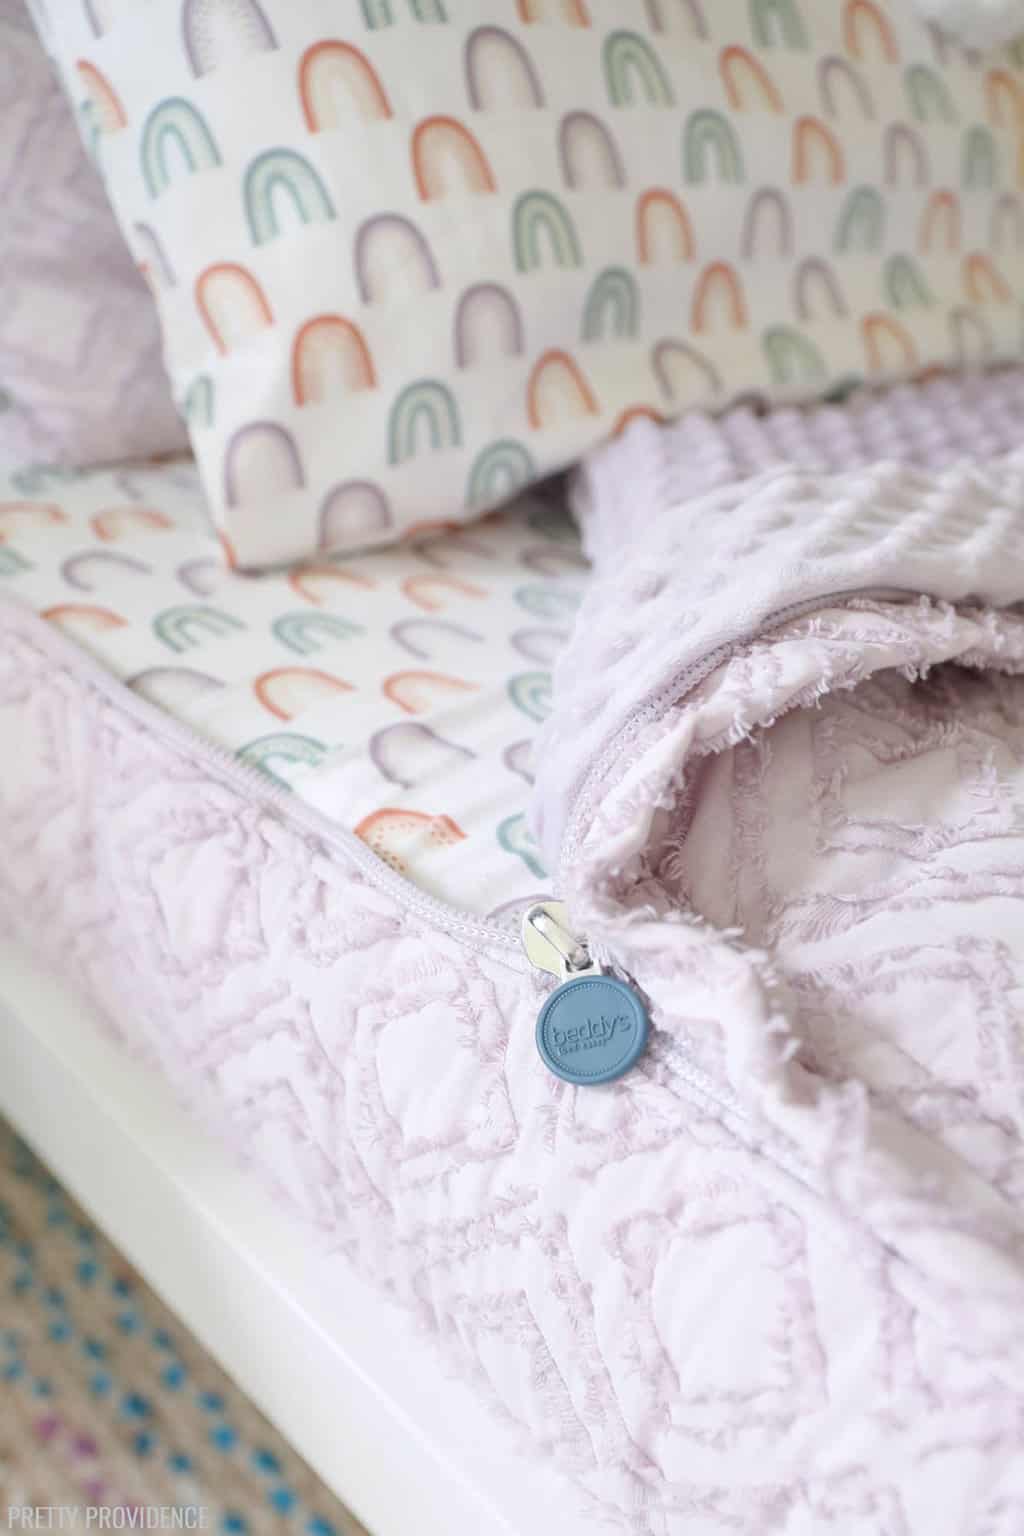 Beddys light purple Olivia zipper bunk bed bedding.